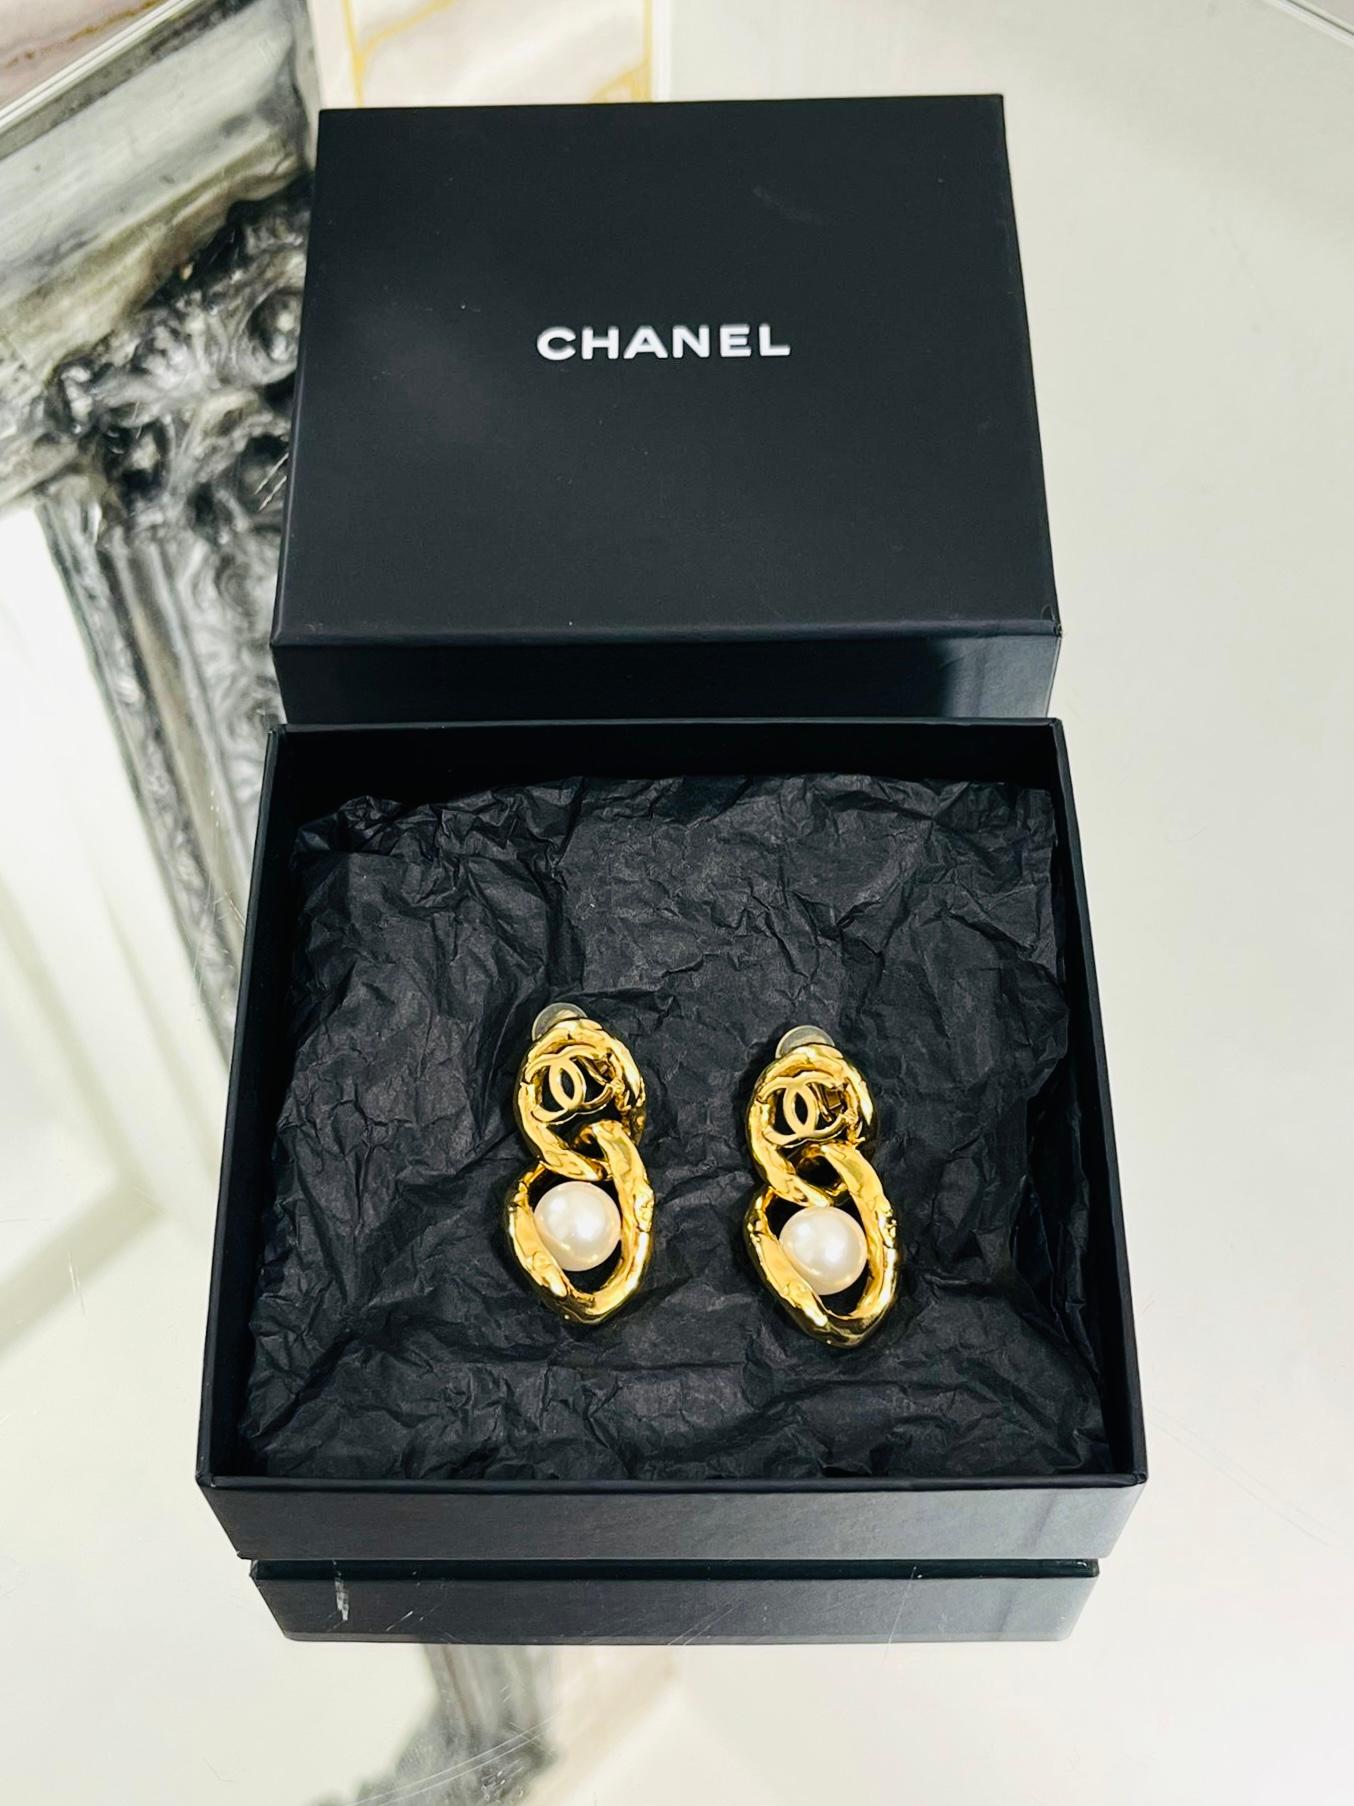 Chanel 'CC' Logo und Perlenohrringe

24-karätig vergoldete, klobige Ohrringe mit großem CC